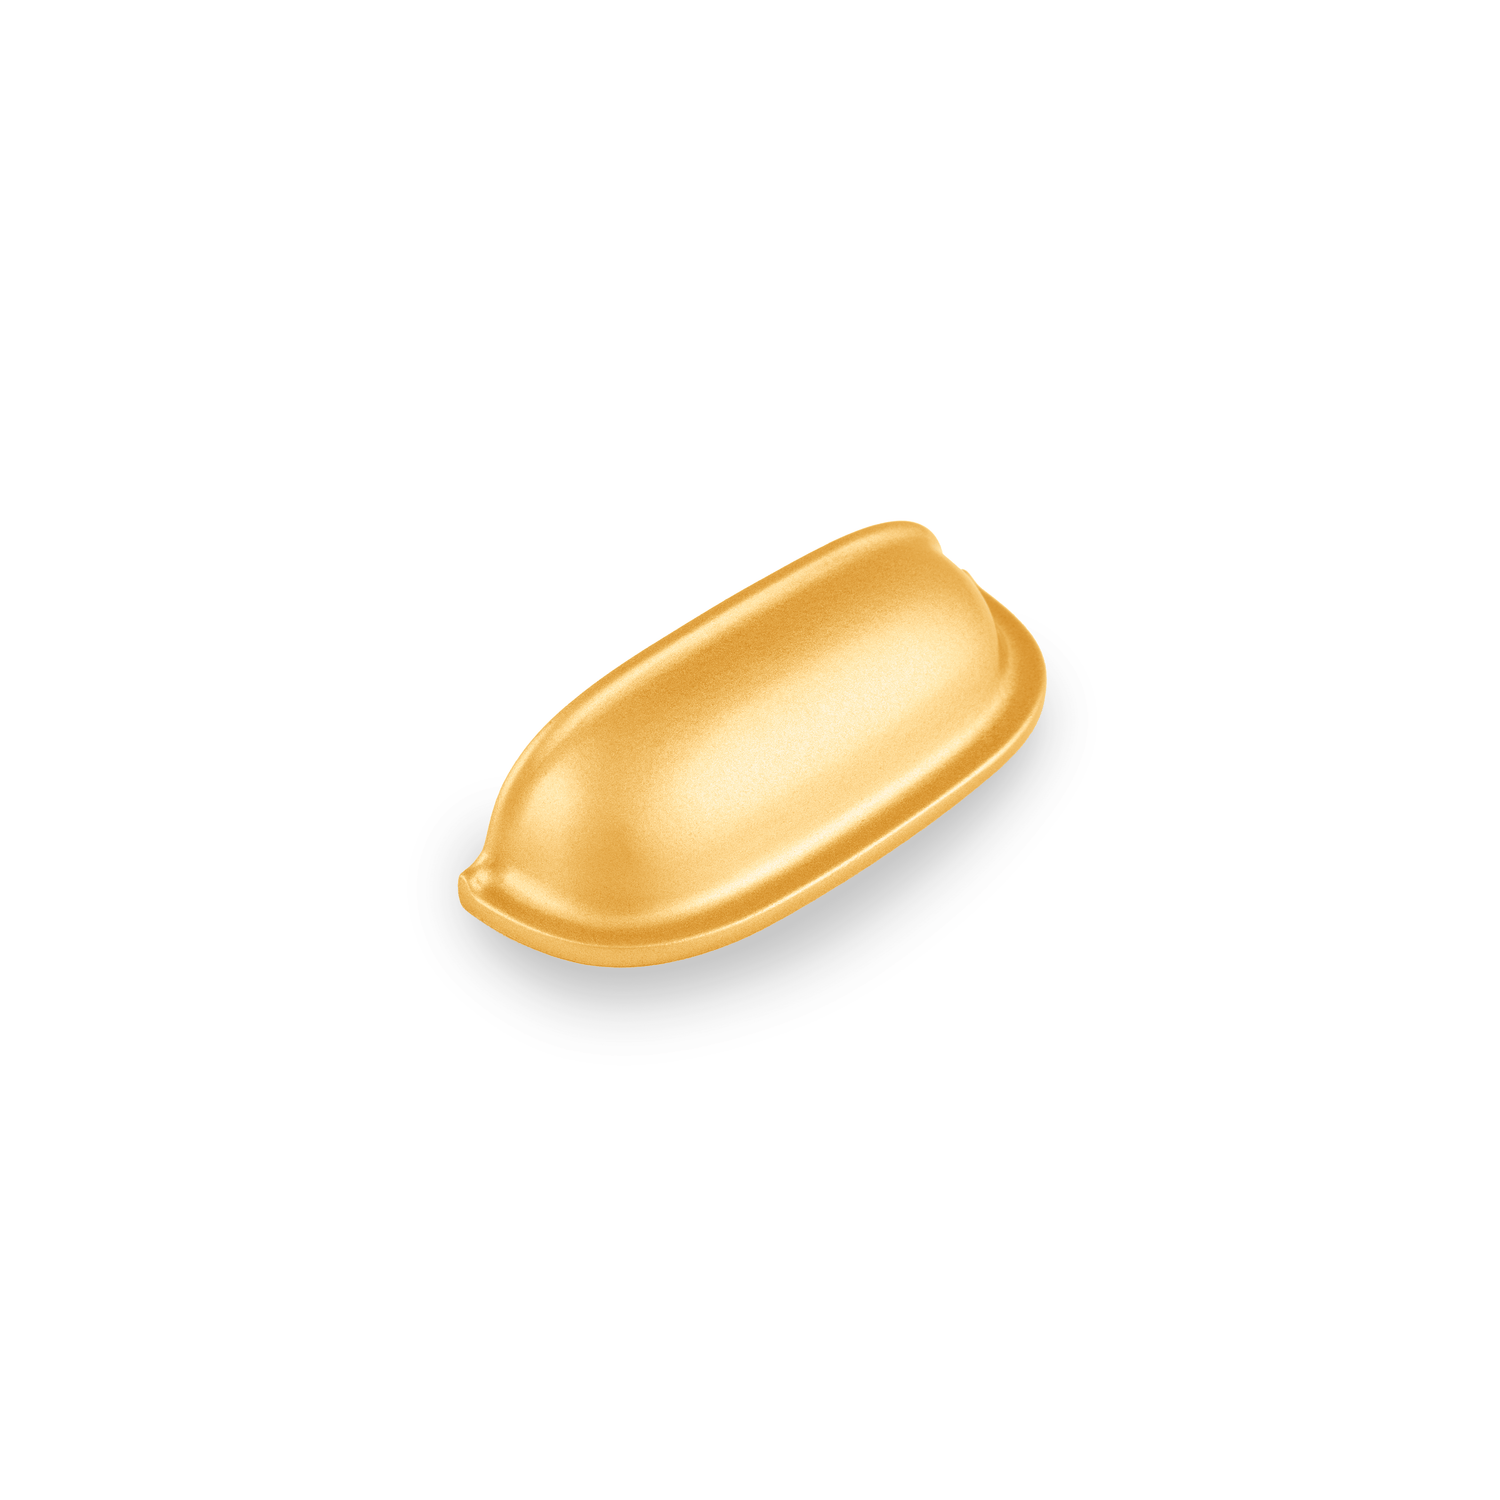 Portico Pull Knob Handles 88mm / Gold / Zinc Alloy - M A N T A R A